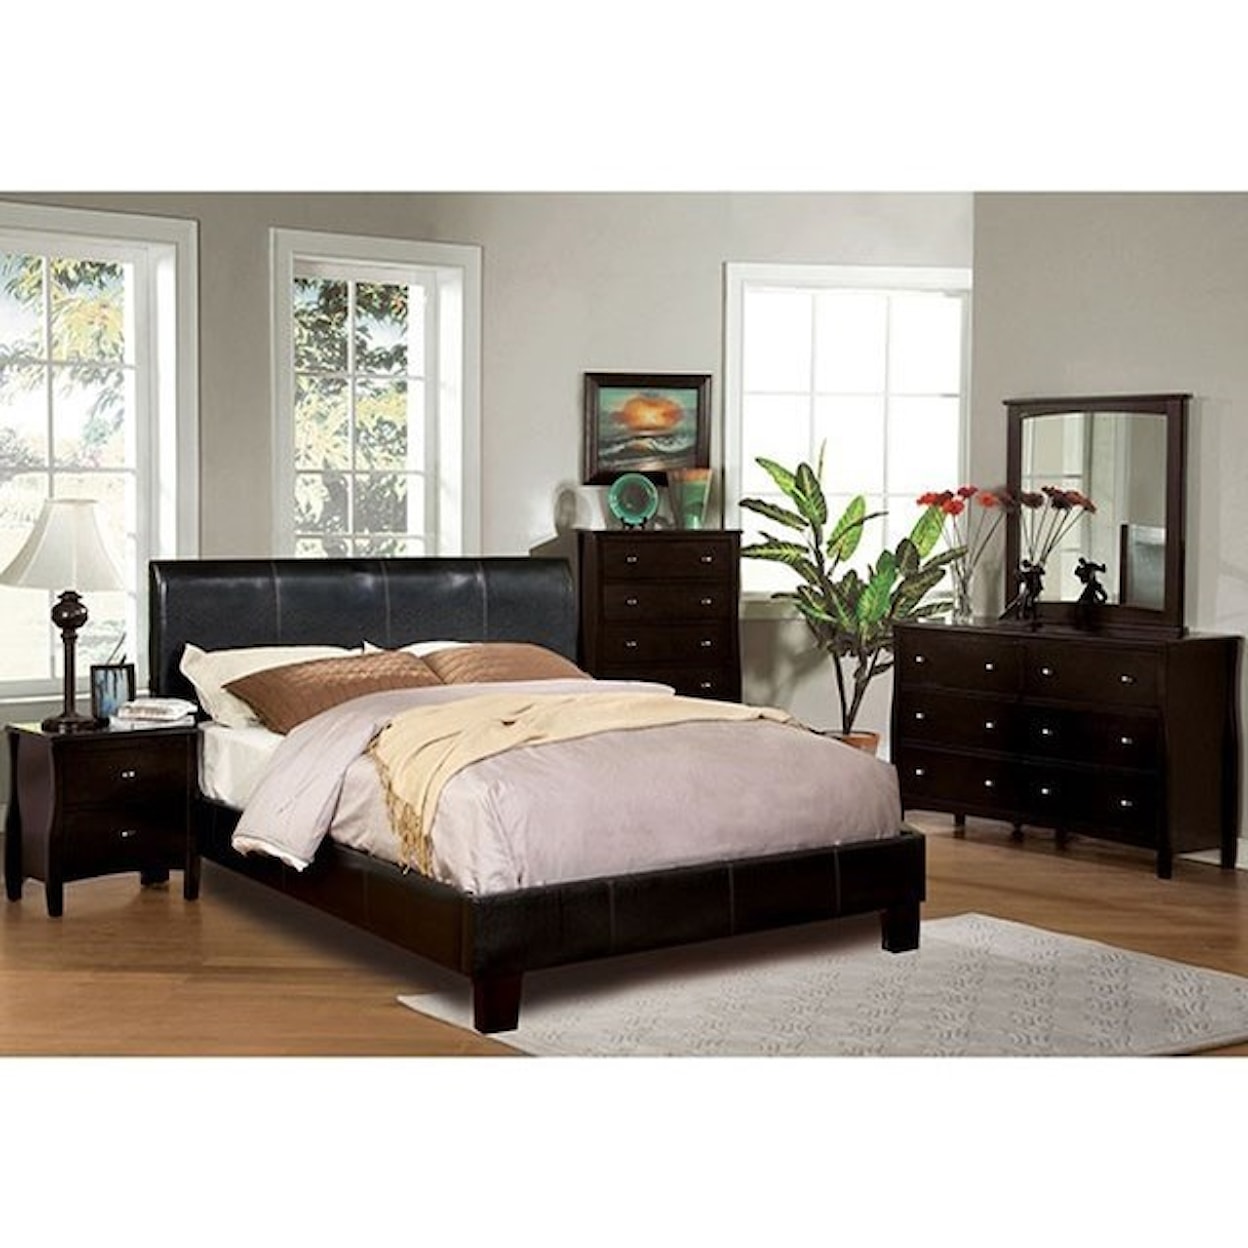 Furniture of America Villa Park California King Bed